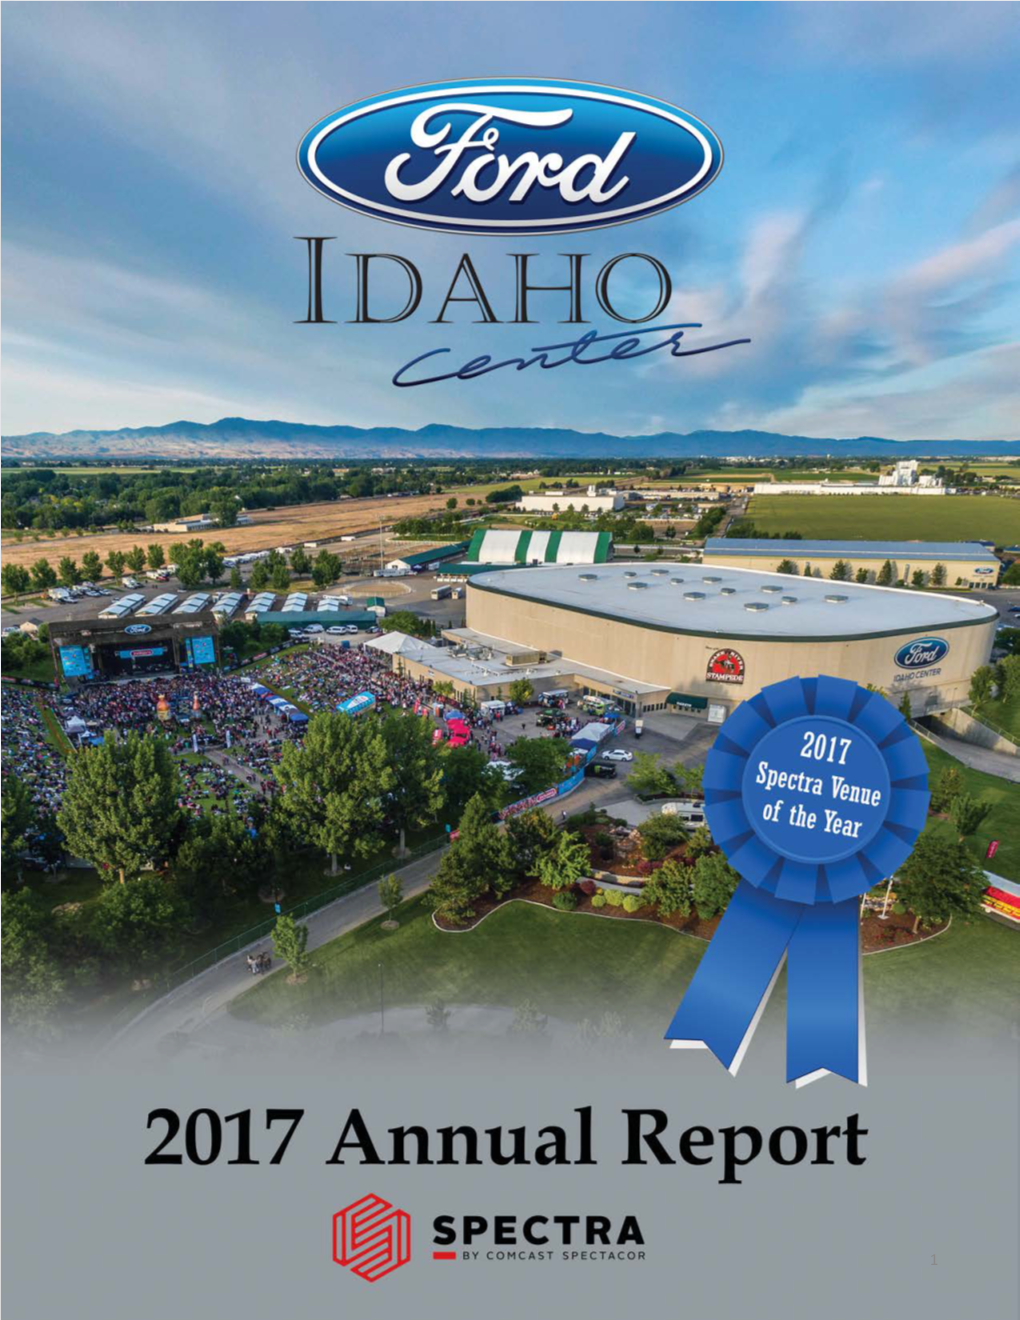 Ford Idaho Center Report